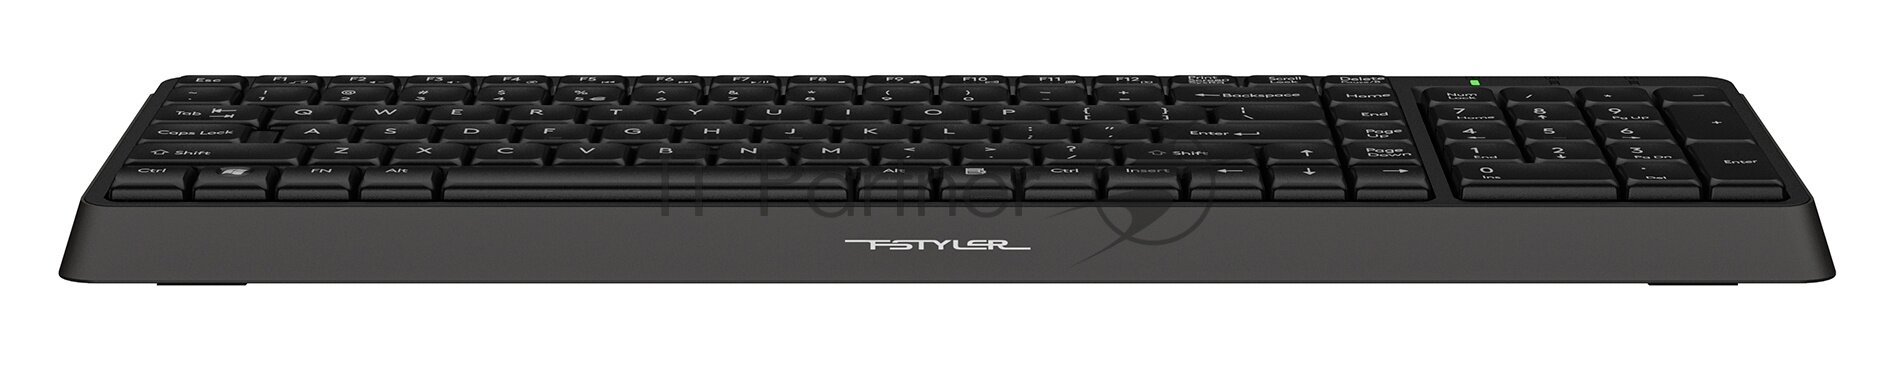 Клавиатура A4TECH Fstyler , USB, черный - фото №8